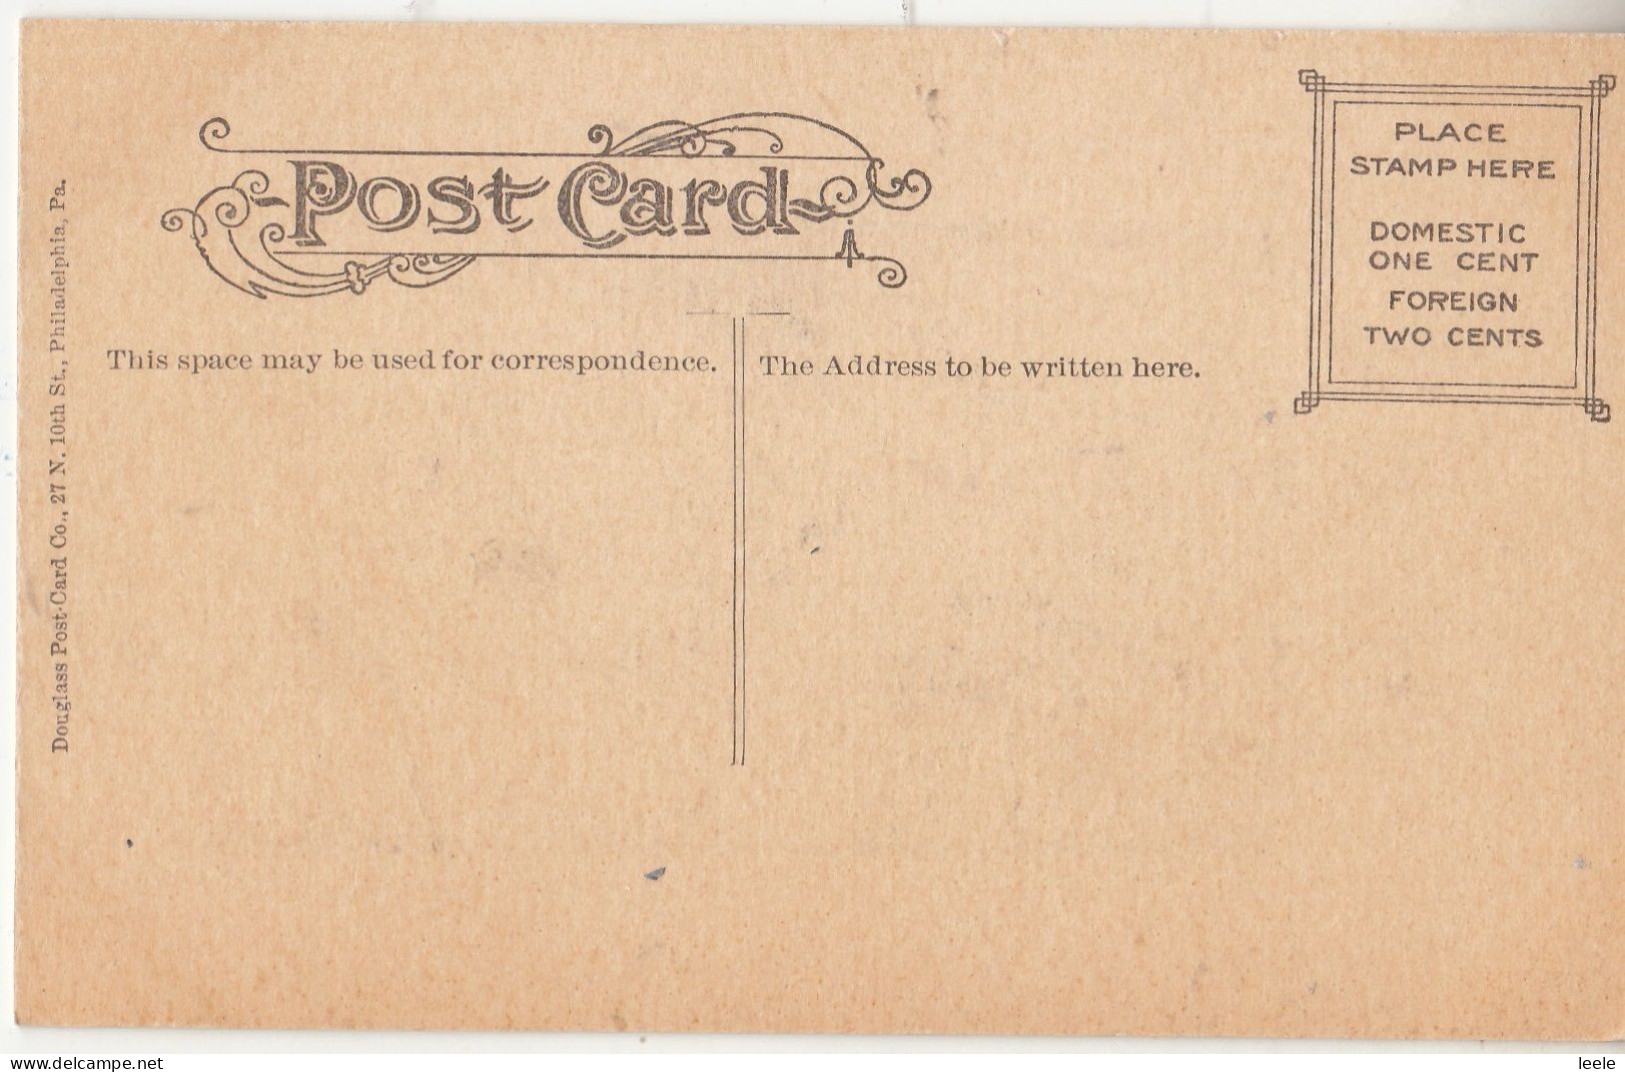 C07. Vintage Postcard. Who Cares? Romantic Couple Sitting On The Fence. - Koppels